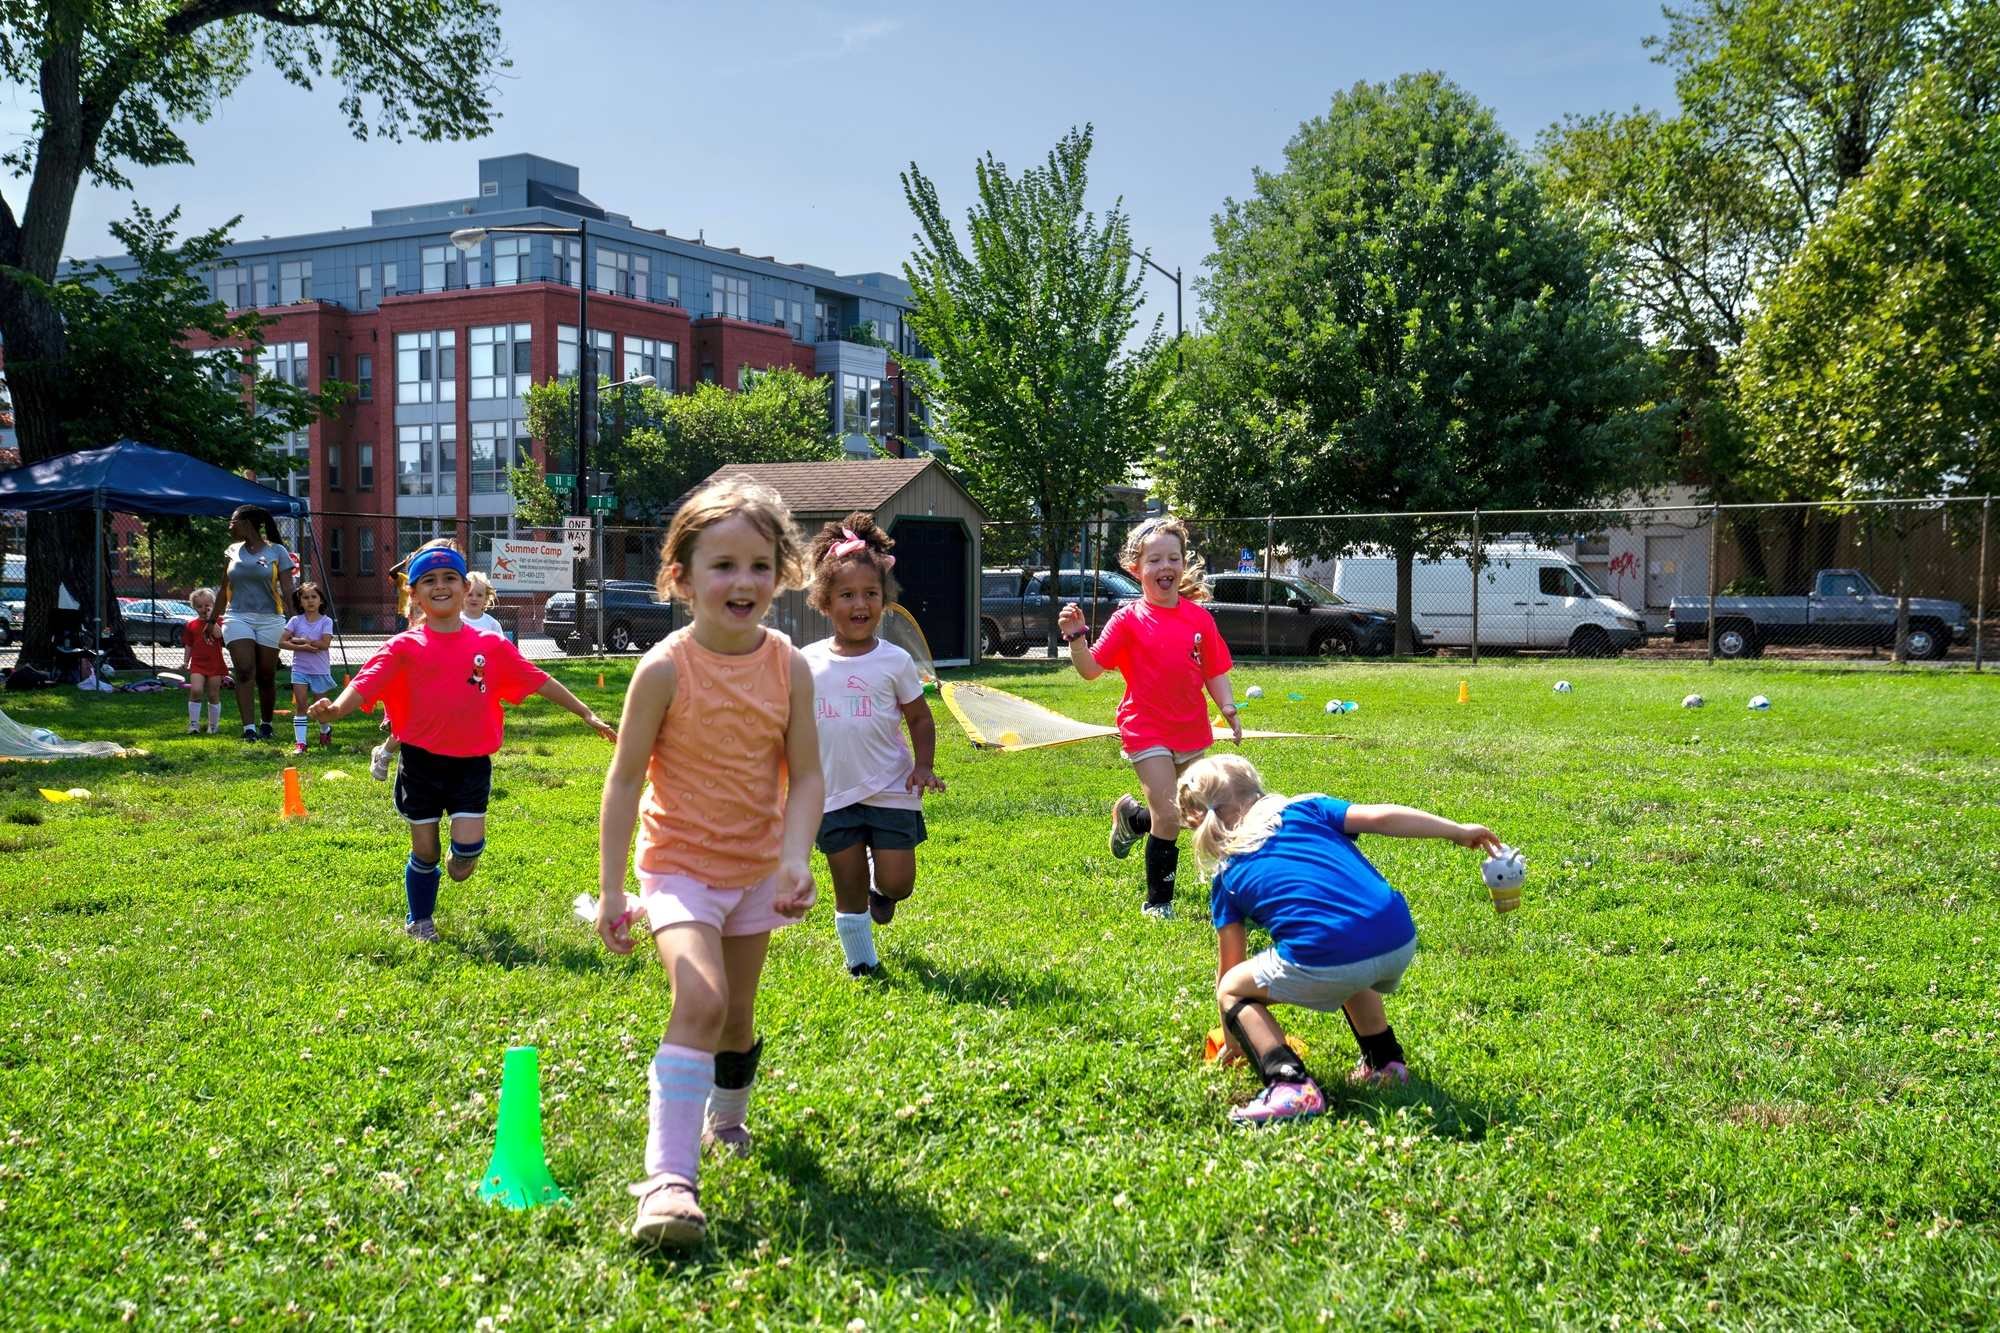 Dc-way-soccer-club-for-kids-in-washington-dc-summer-camp-at-tyler-elementary-school- 0247.jpg